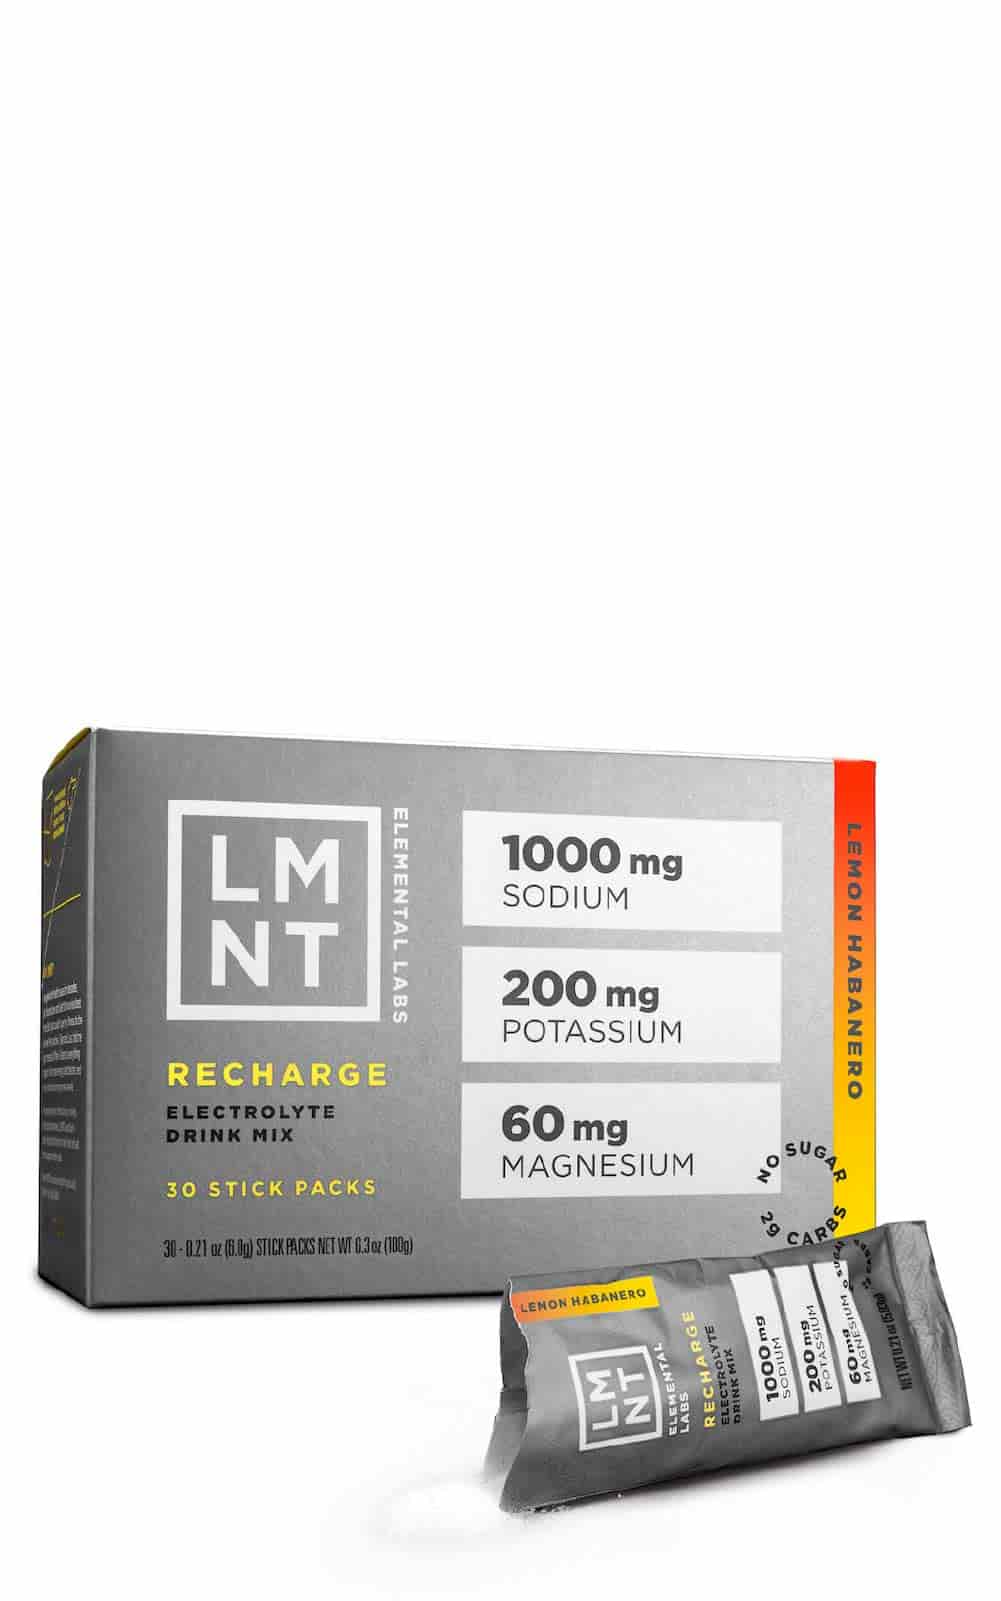 LMNT Recharge Electrolyte Drink Mix Lemon Habanero bei LiveHelfi kaufen